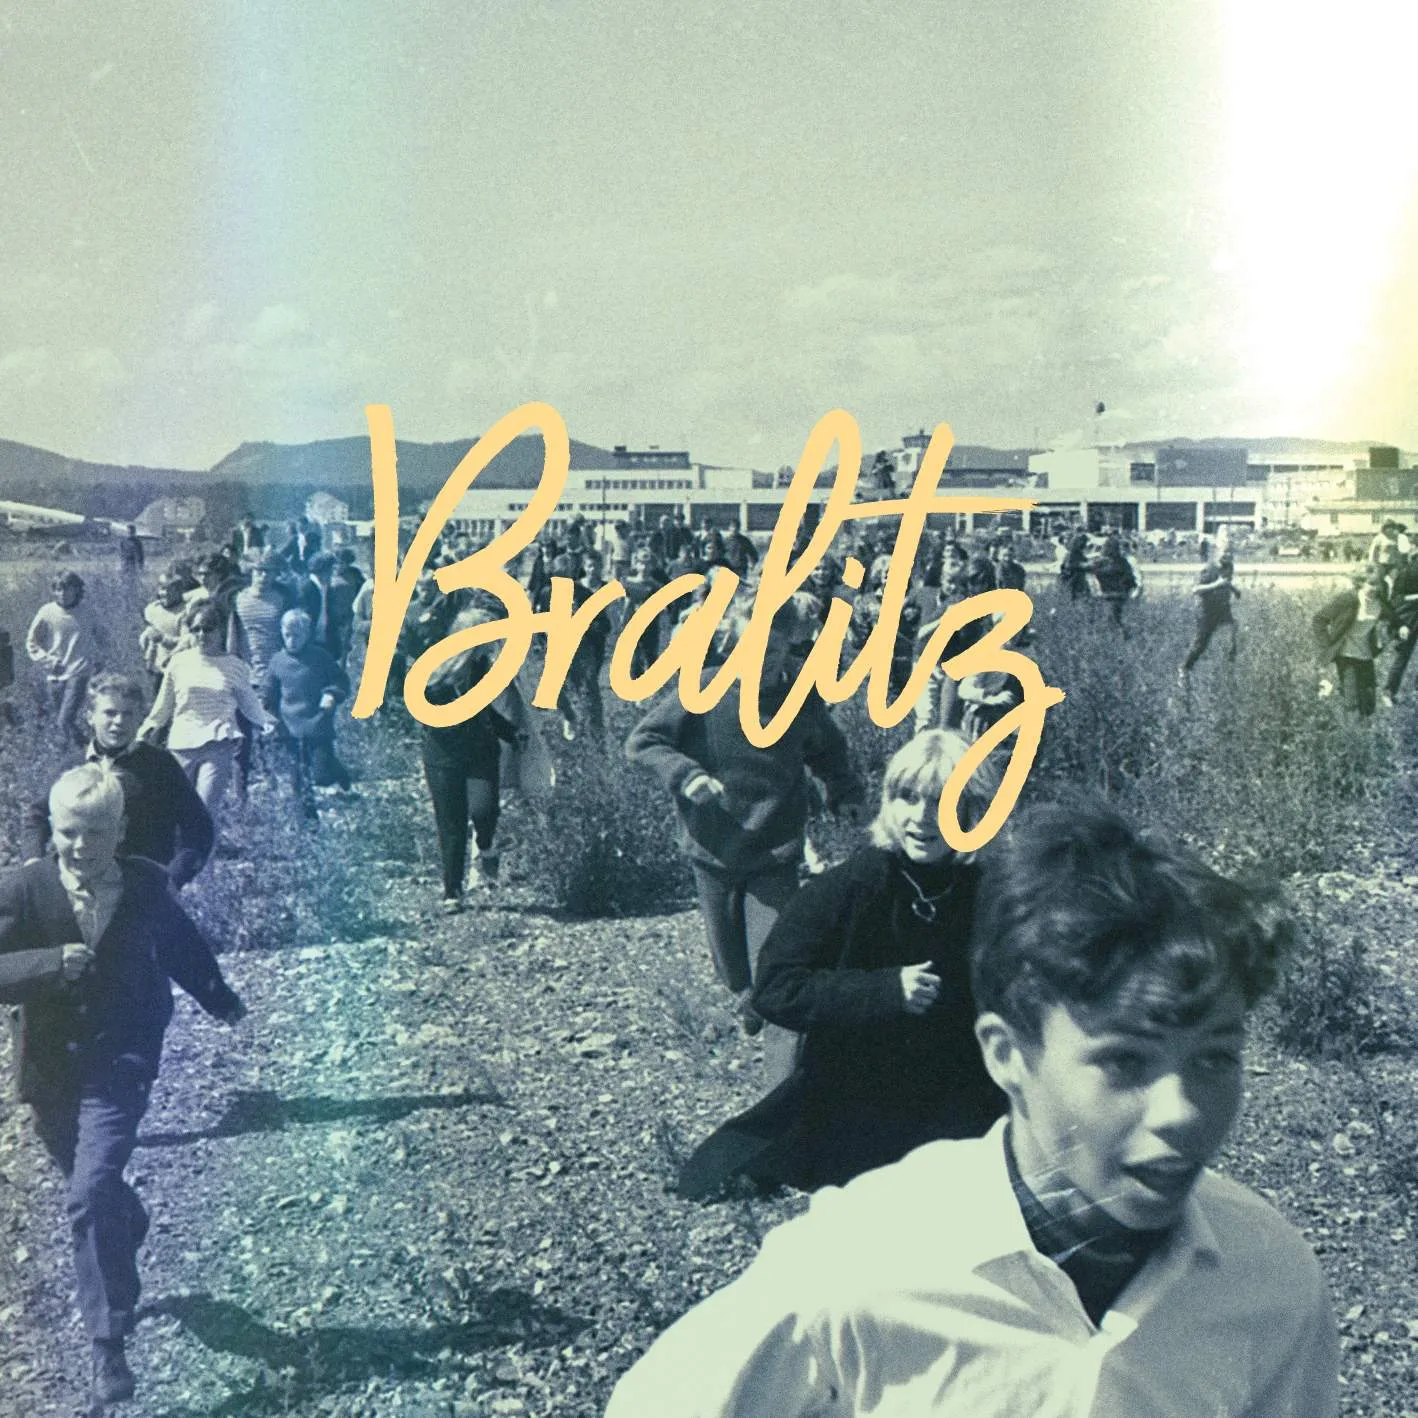 Album cover for “Bralitz” by Bralitz